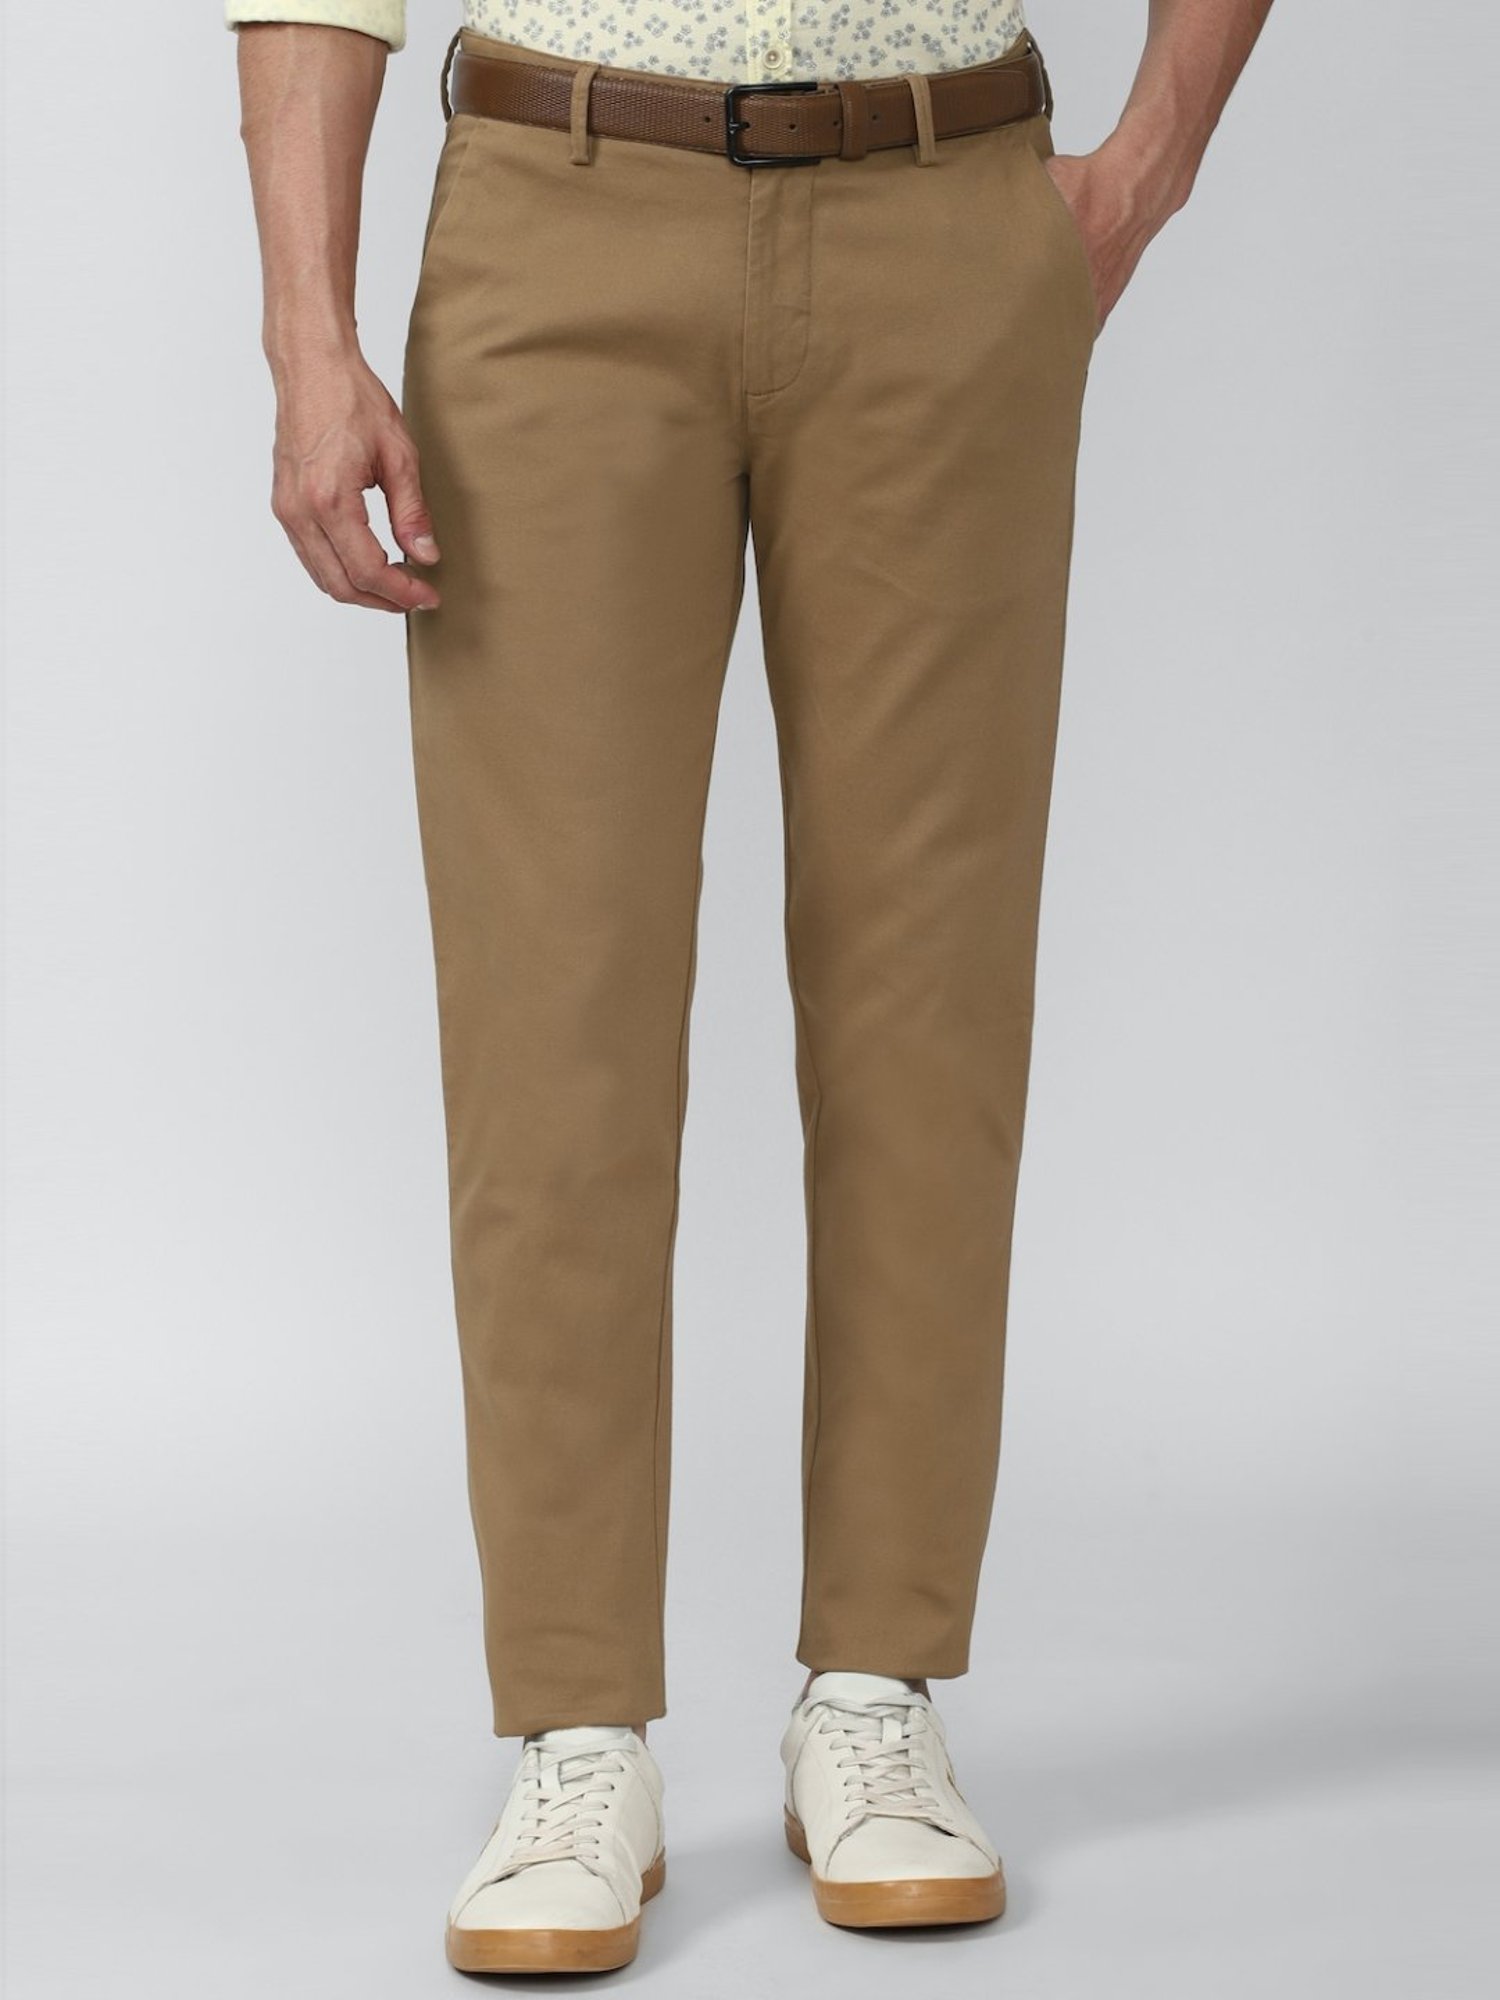 Buy Men Grey Solid Regular Fit Casual Trousers Online  658962  Peter  England